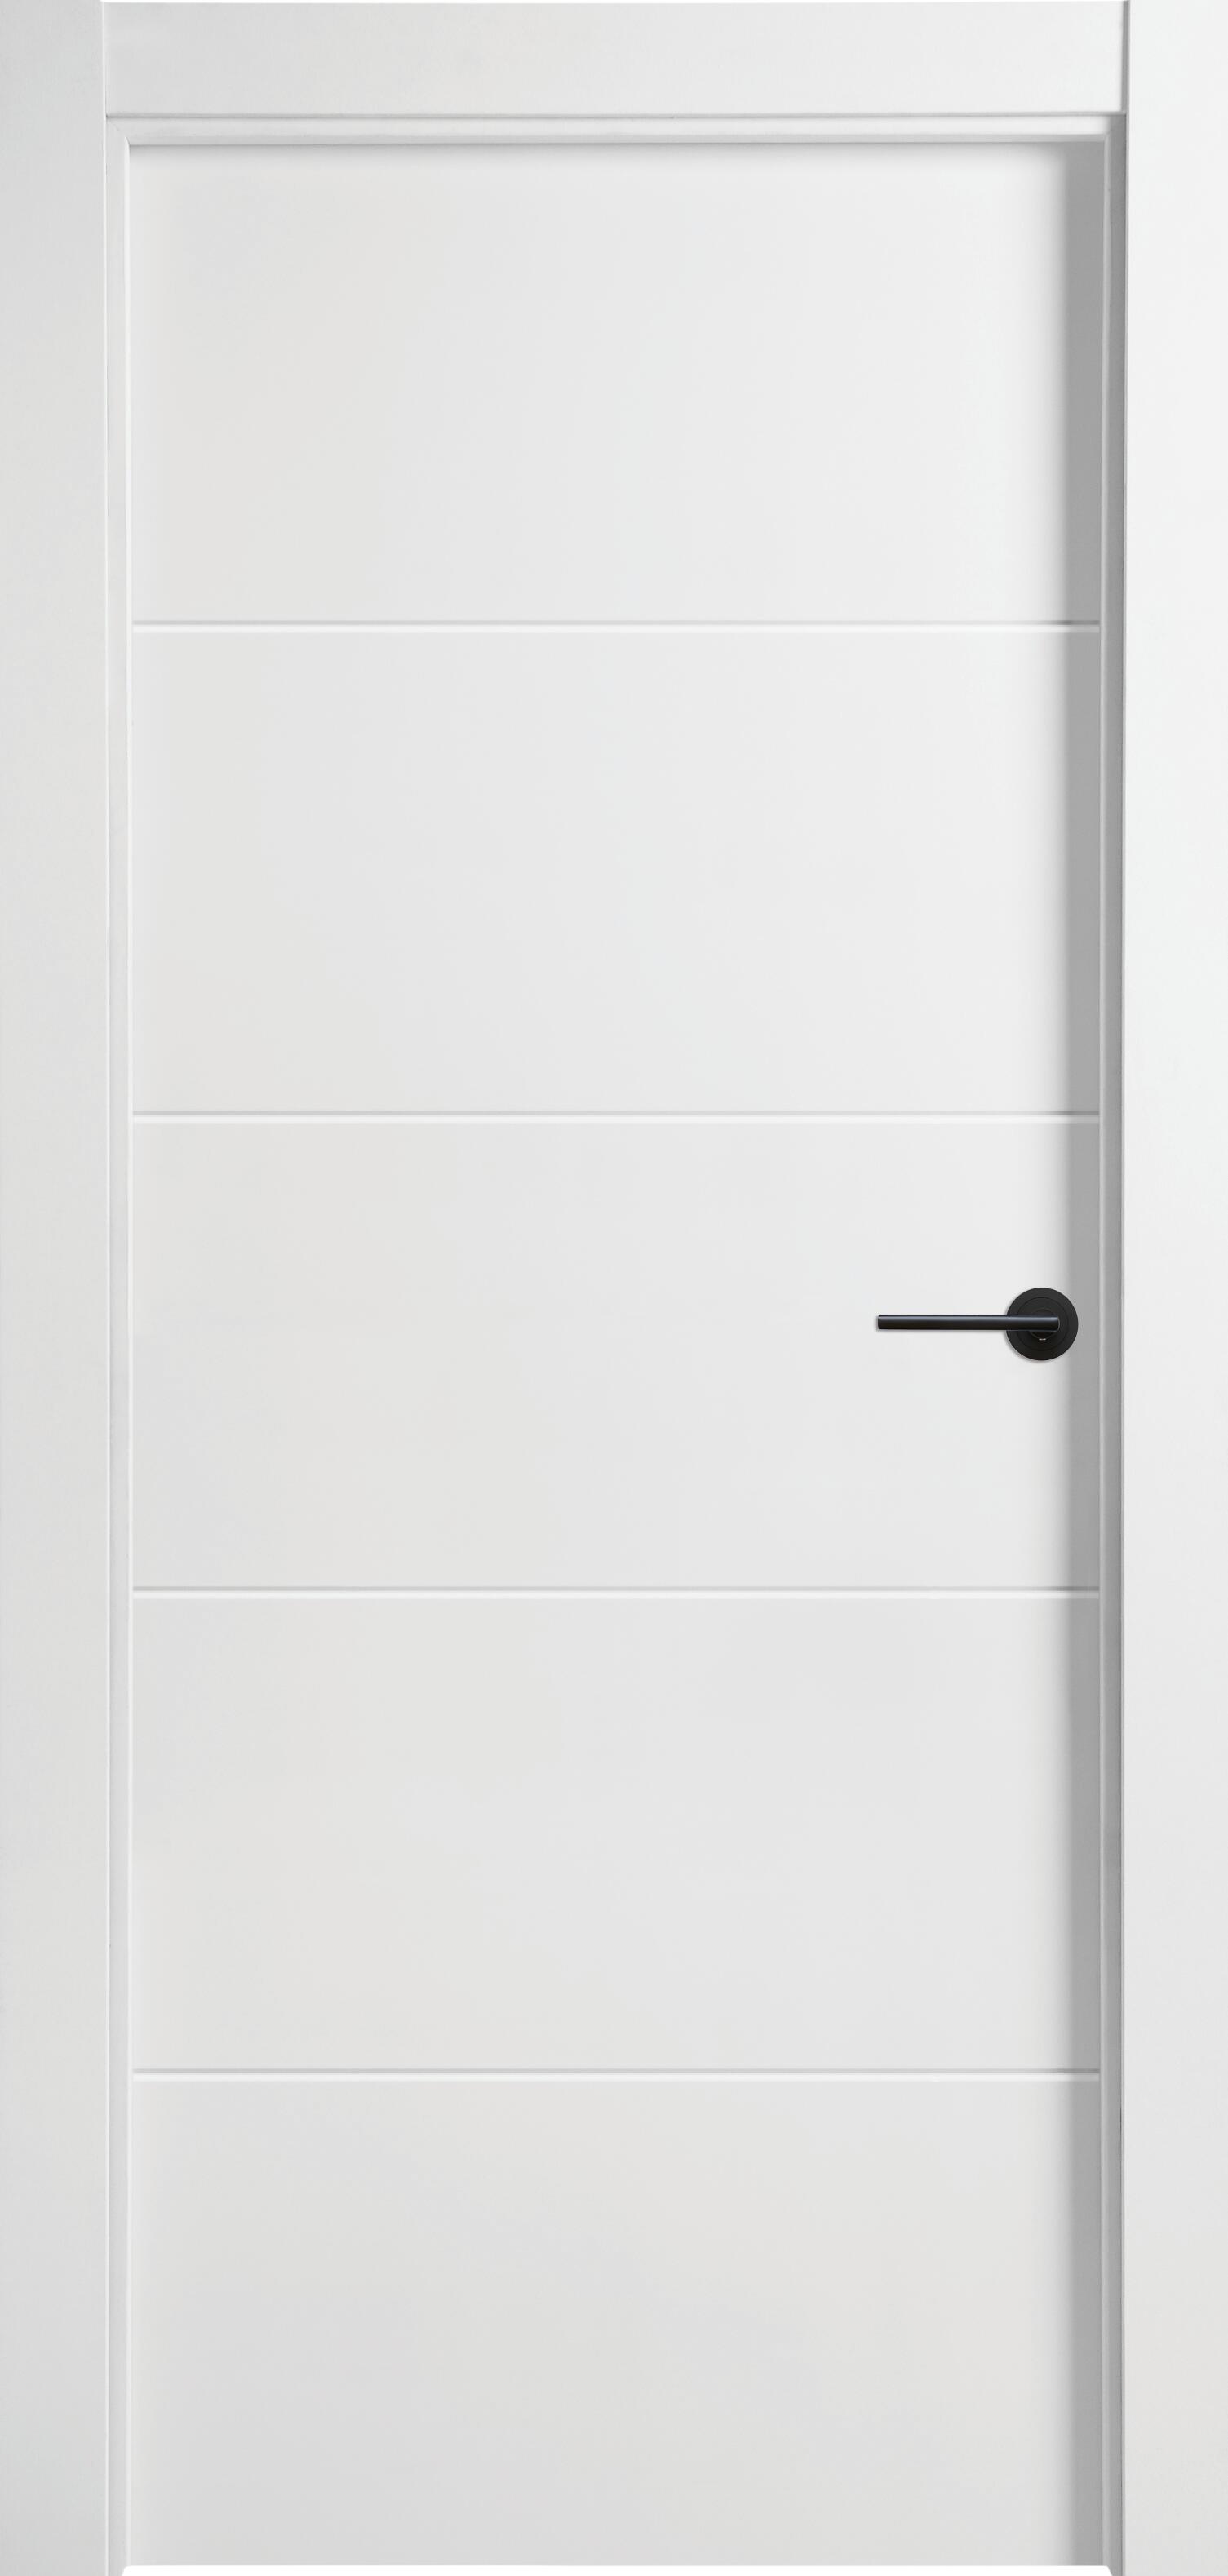 Puerta lucerna plus black blanco de apertura izquierda de 9x72.5 cm